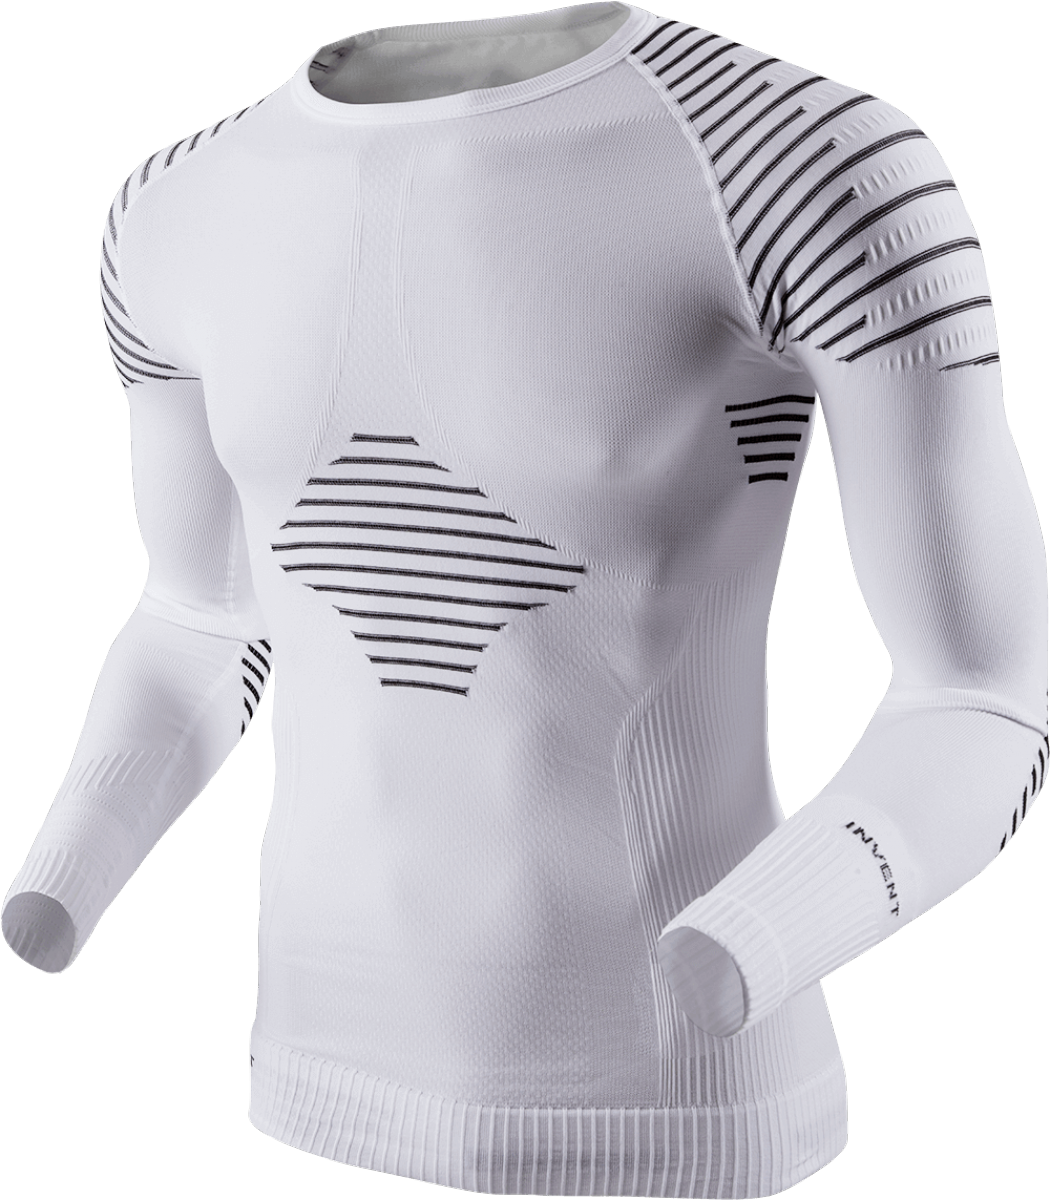 X-BIONIC Invent Shirt LS White Black